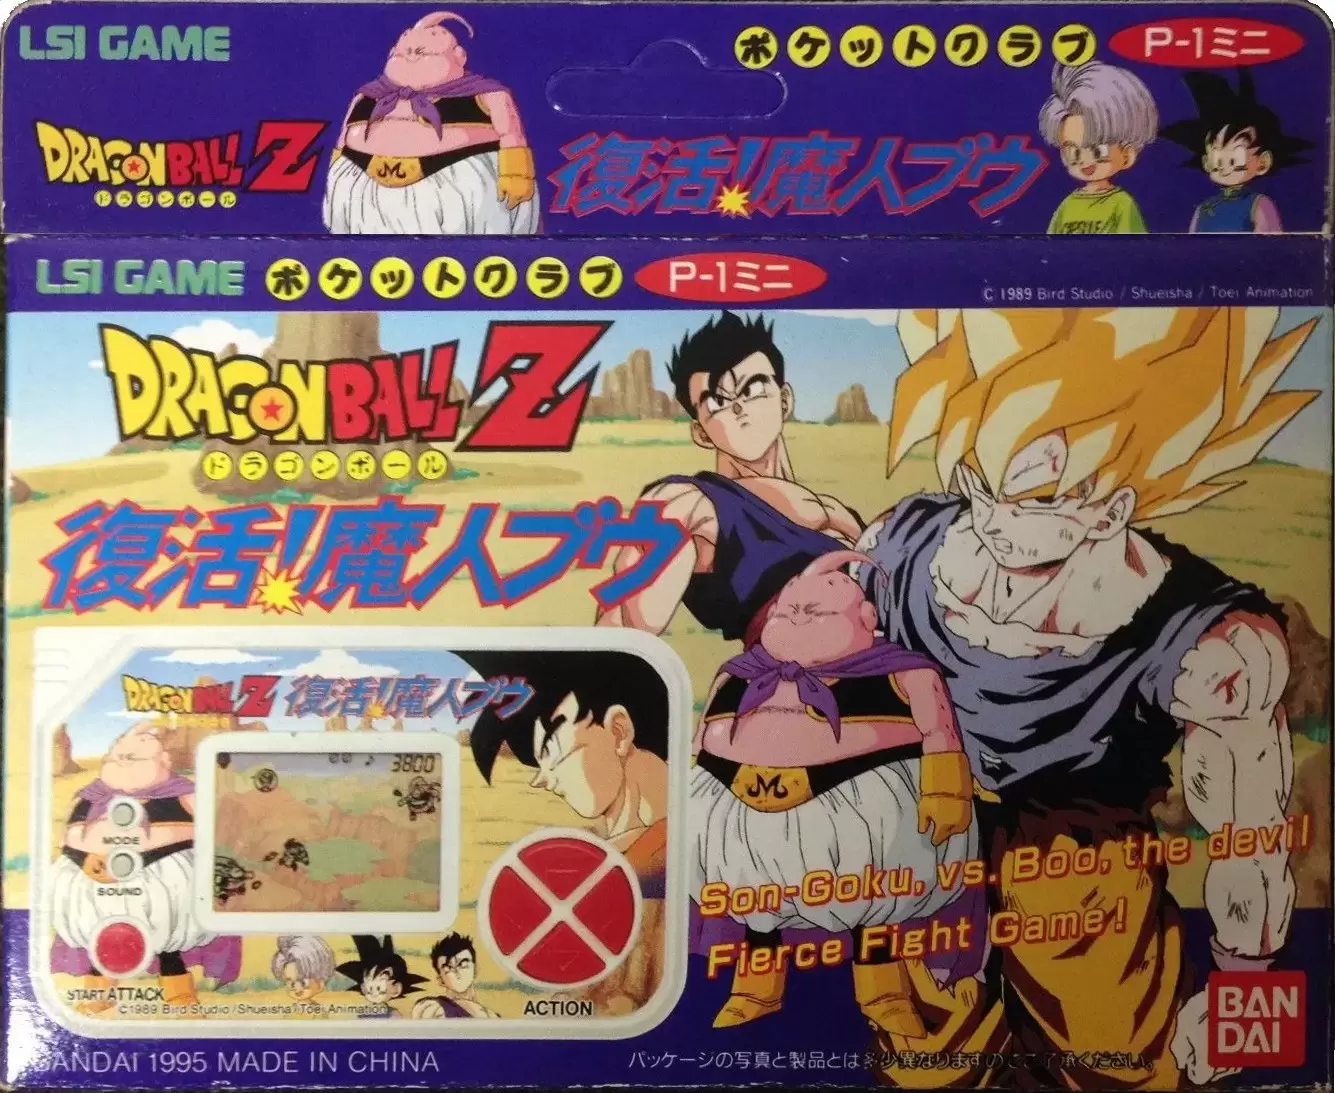 Bandai Electronics - Dragon Ball Z: Fukkatsu! Majin Buu LSI Game